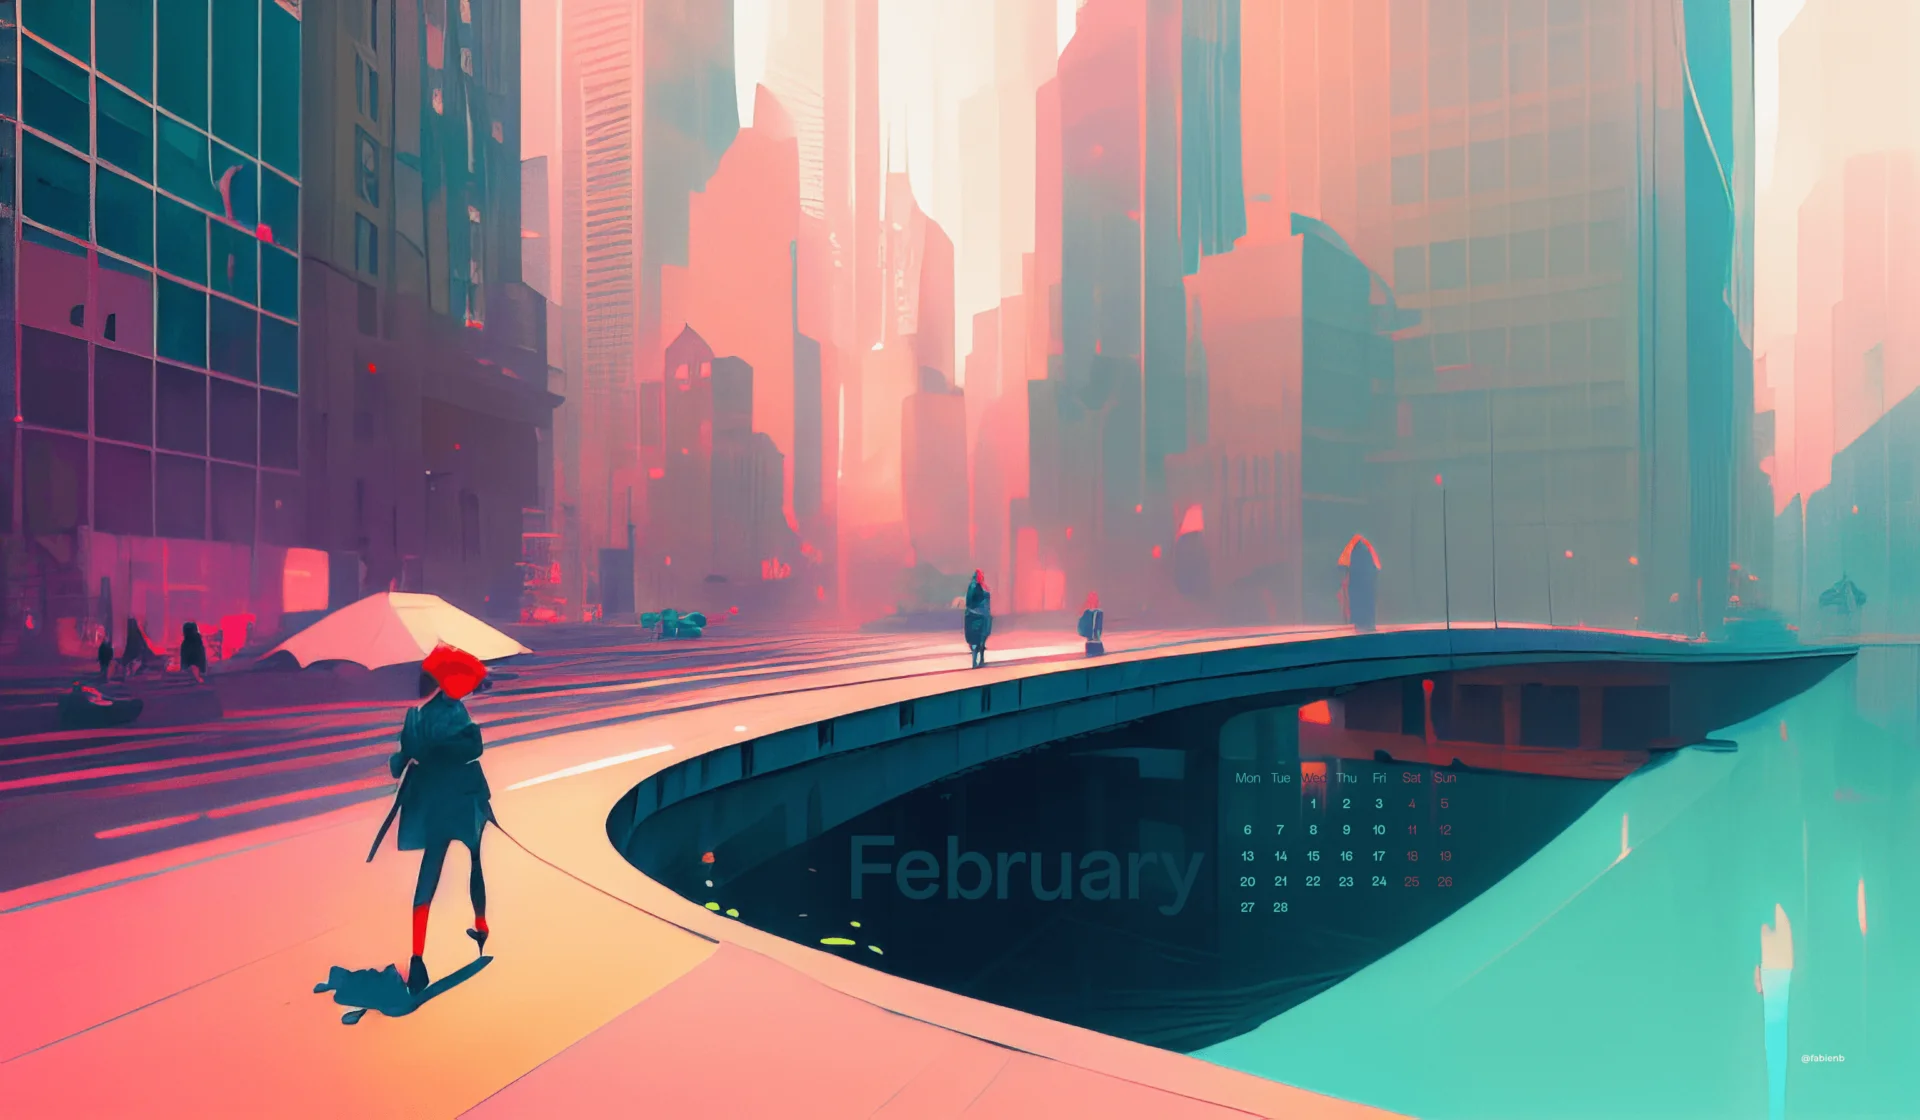 AI Desktop Calendar wallpapers February 2023 Stable Diffusion Midjourney fabienb